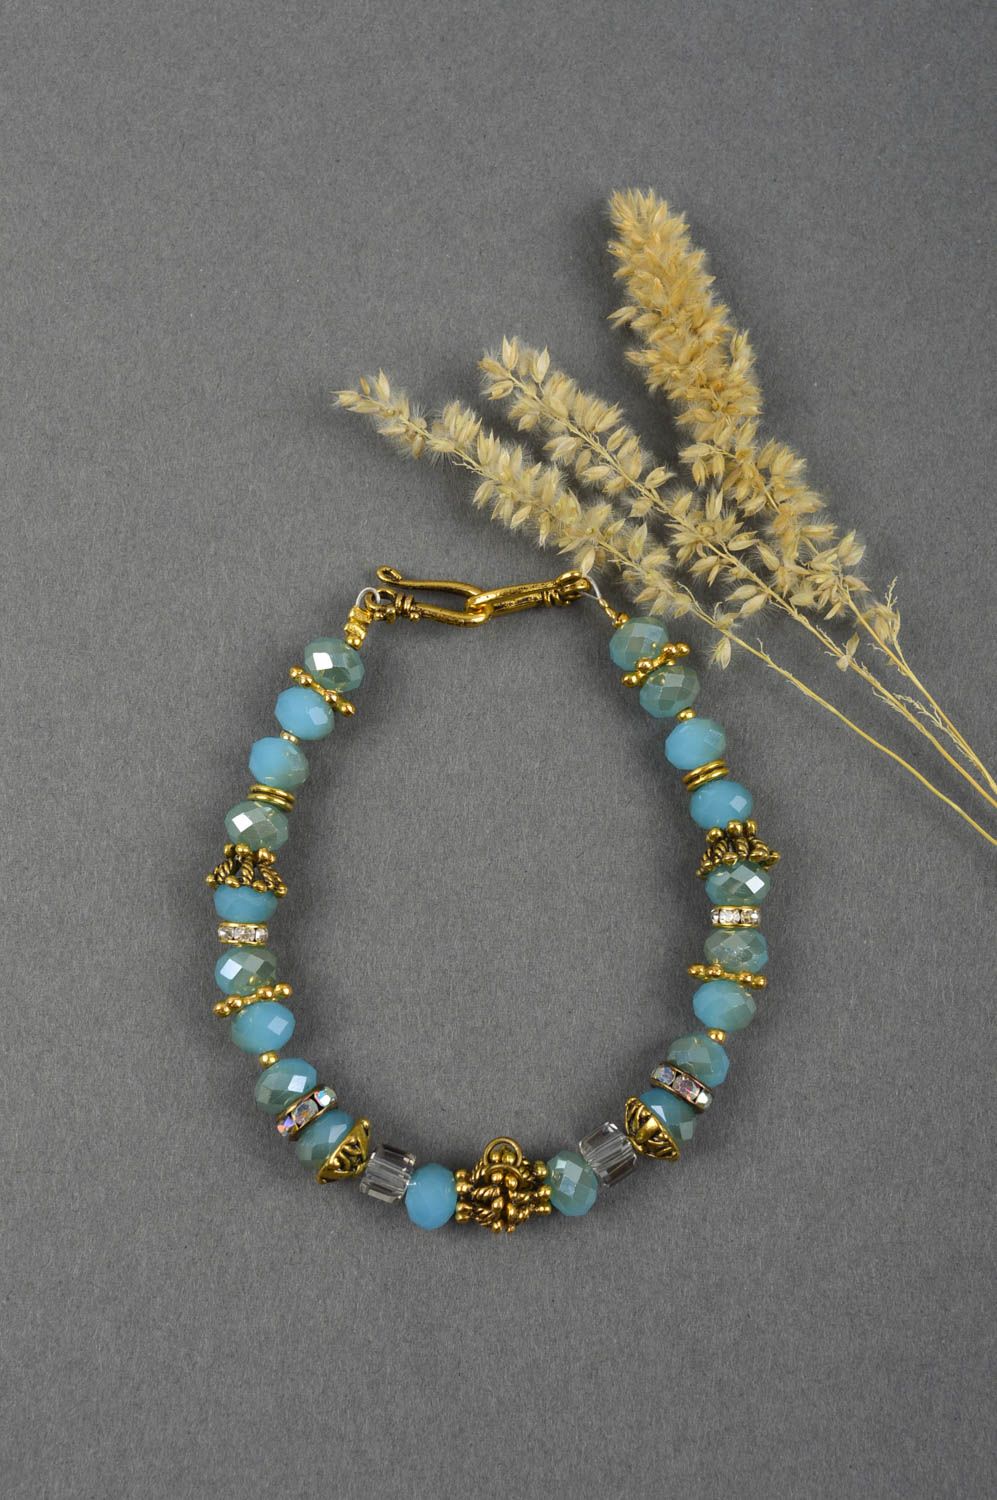 Crystal beads charm bracelet in light blue color for teen girls photo 1